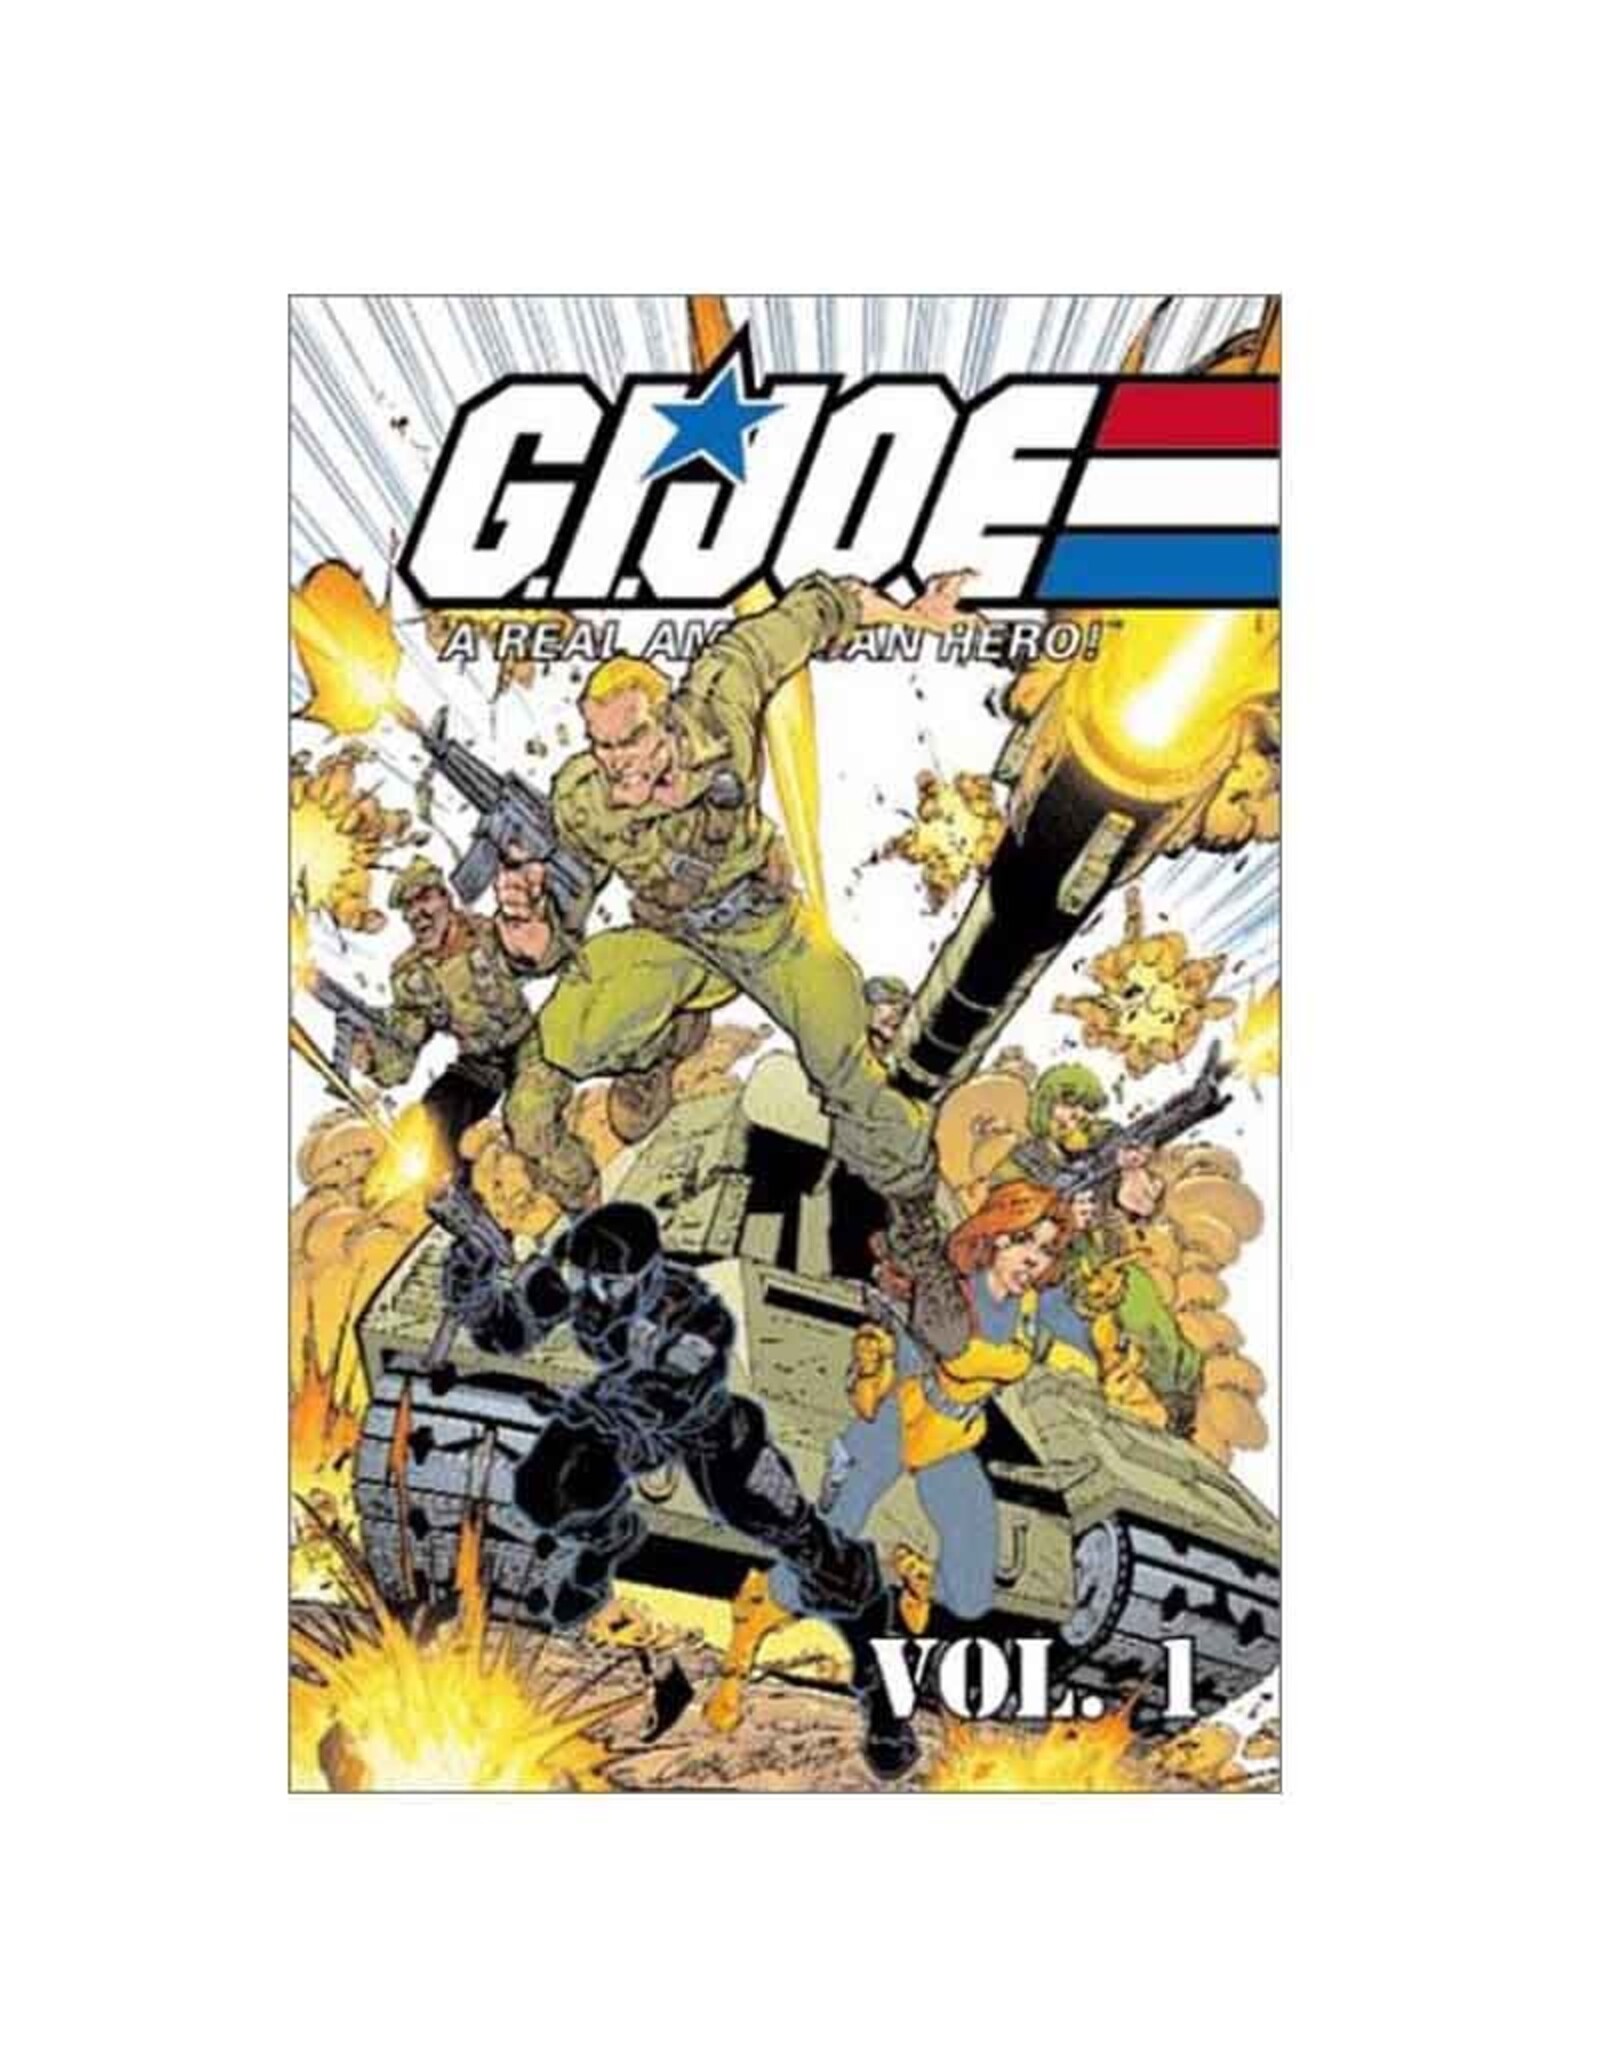 Marvel Comics G.I. Joe Volume 01 TPB